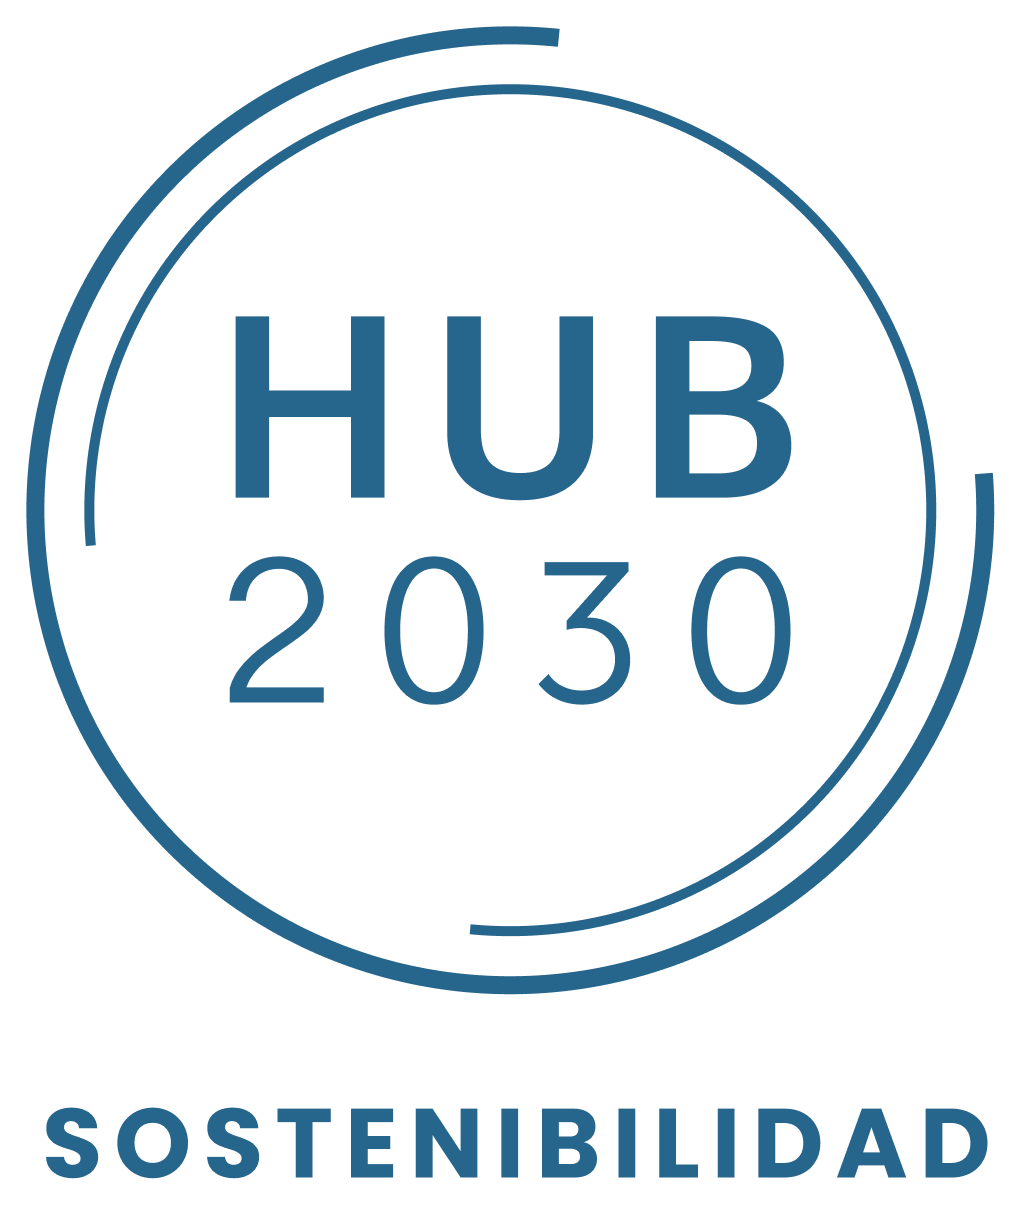 HUB 2030